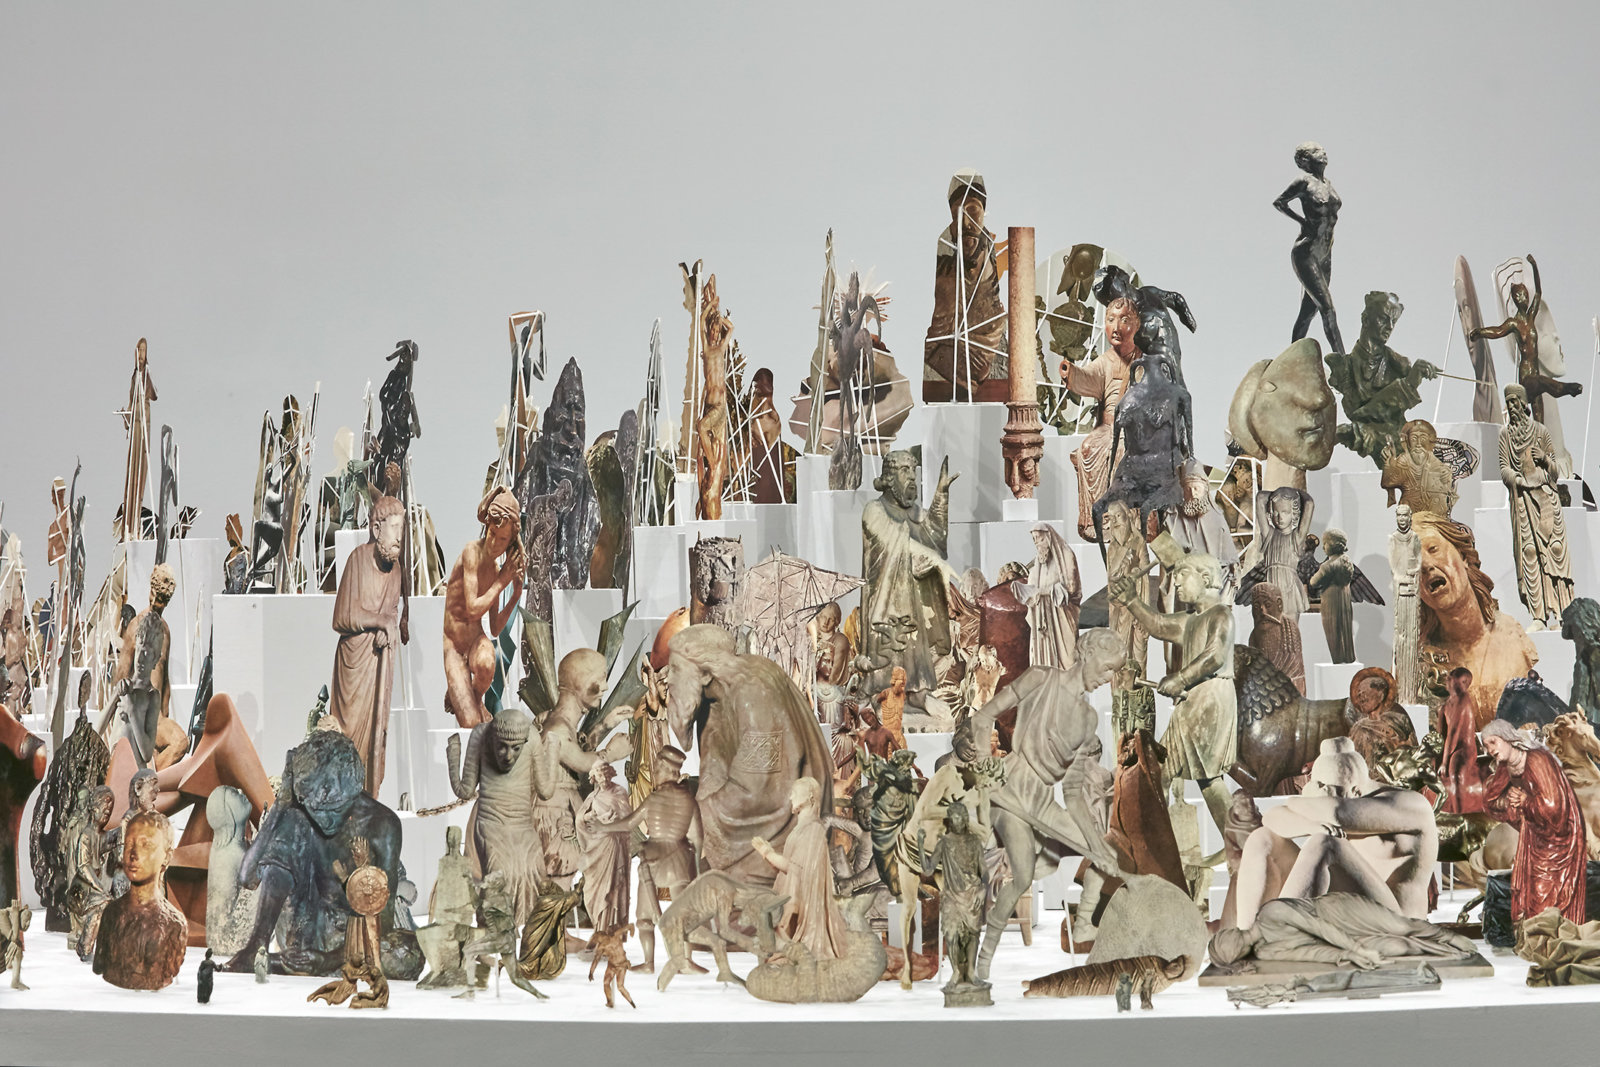 Geoffrey Farmer, Boneyard (detail), 2013, paper cutouts, wood, glue, dimensions variable. Installation view, ICA Boston, 2016